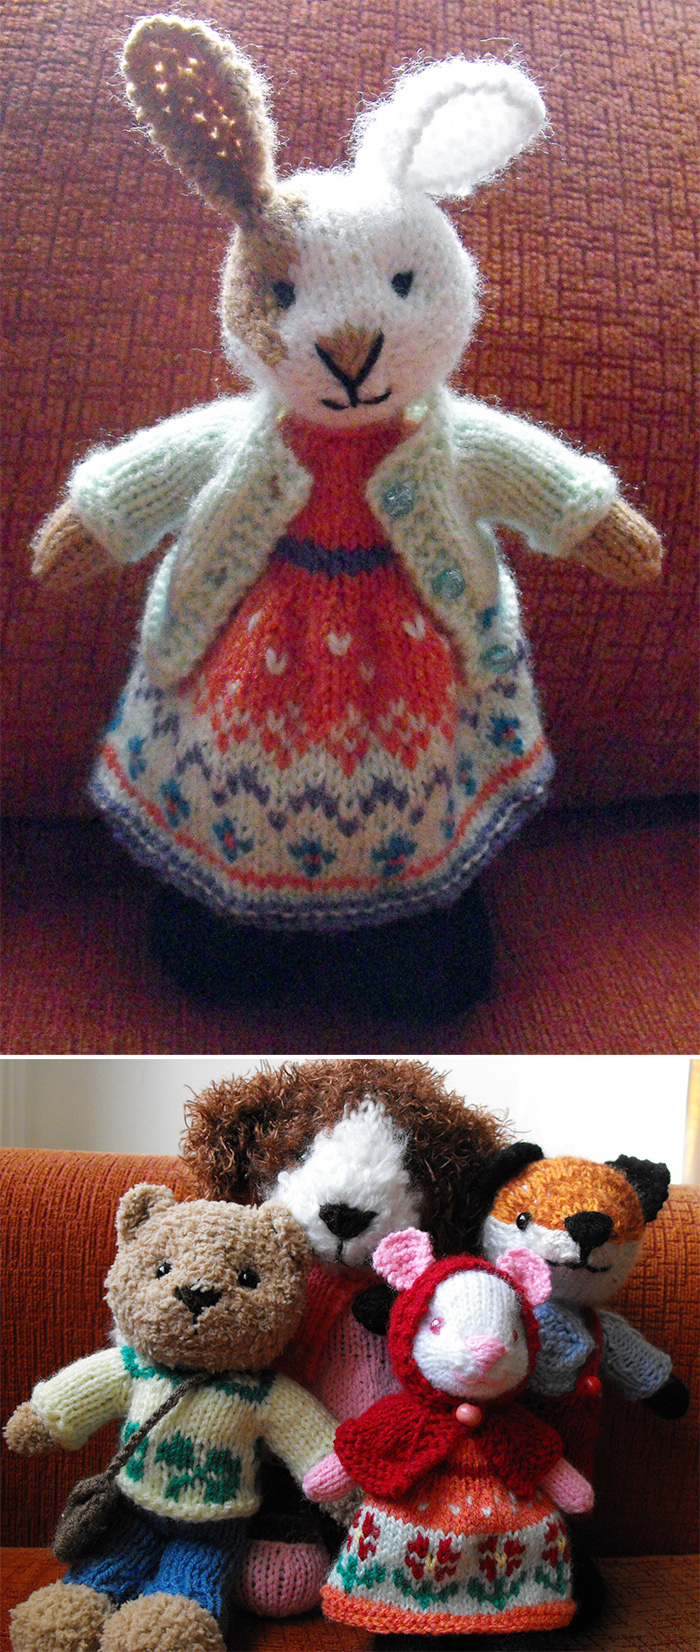 Bunny Rabbit Knitting Patterns In the Loop Knitting